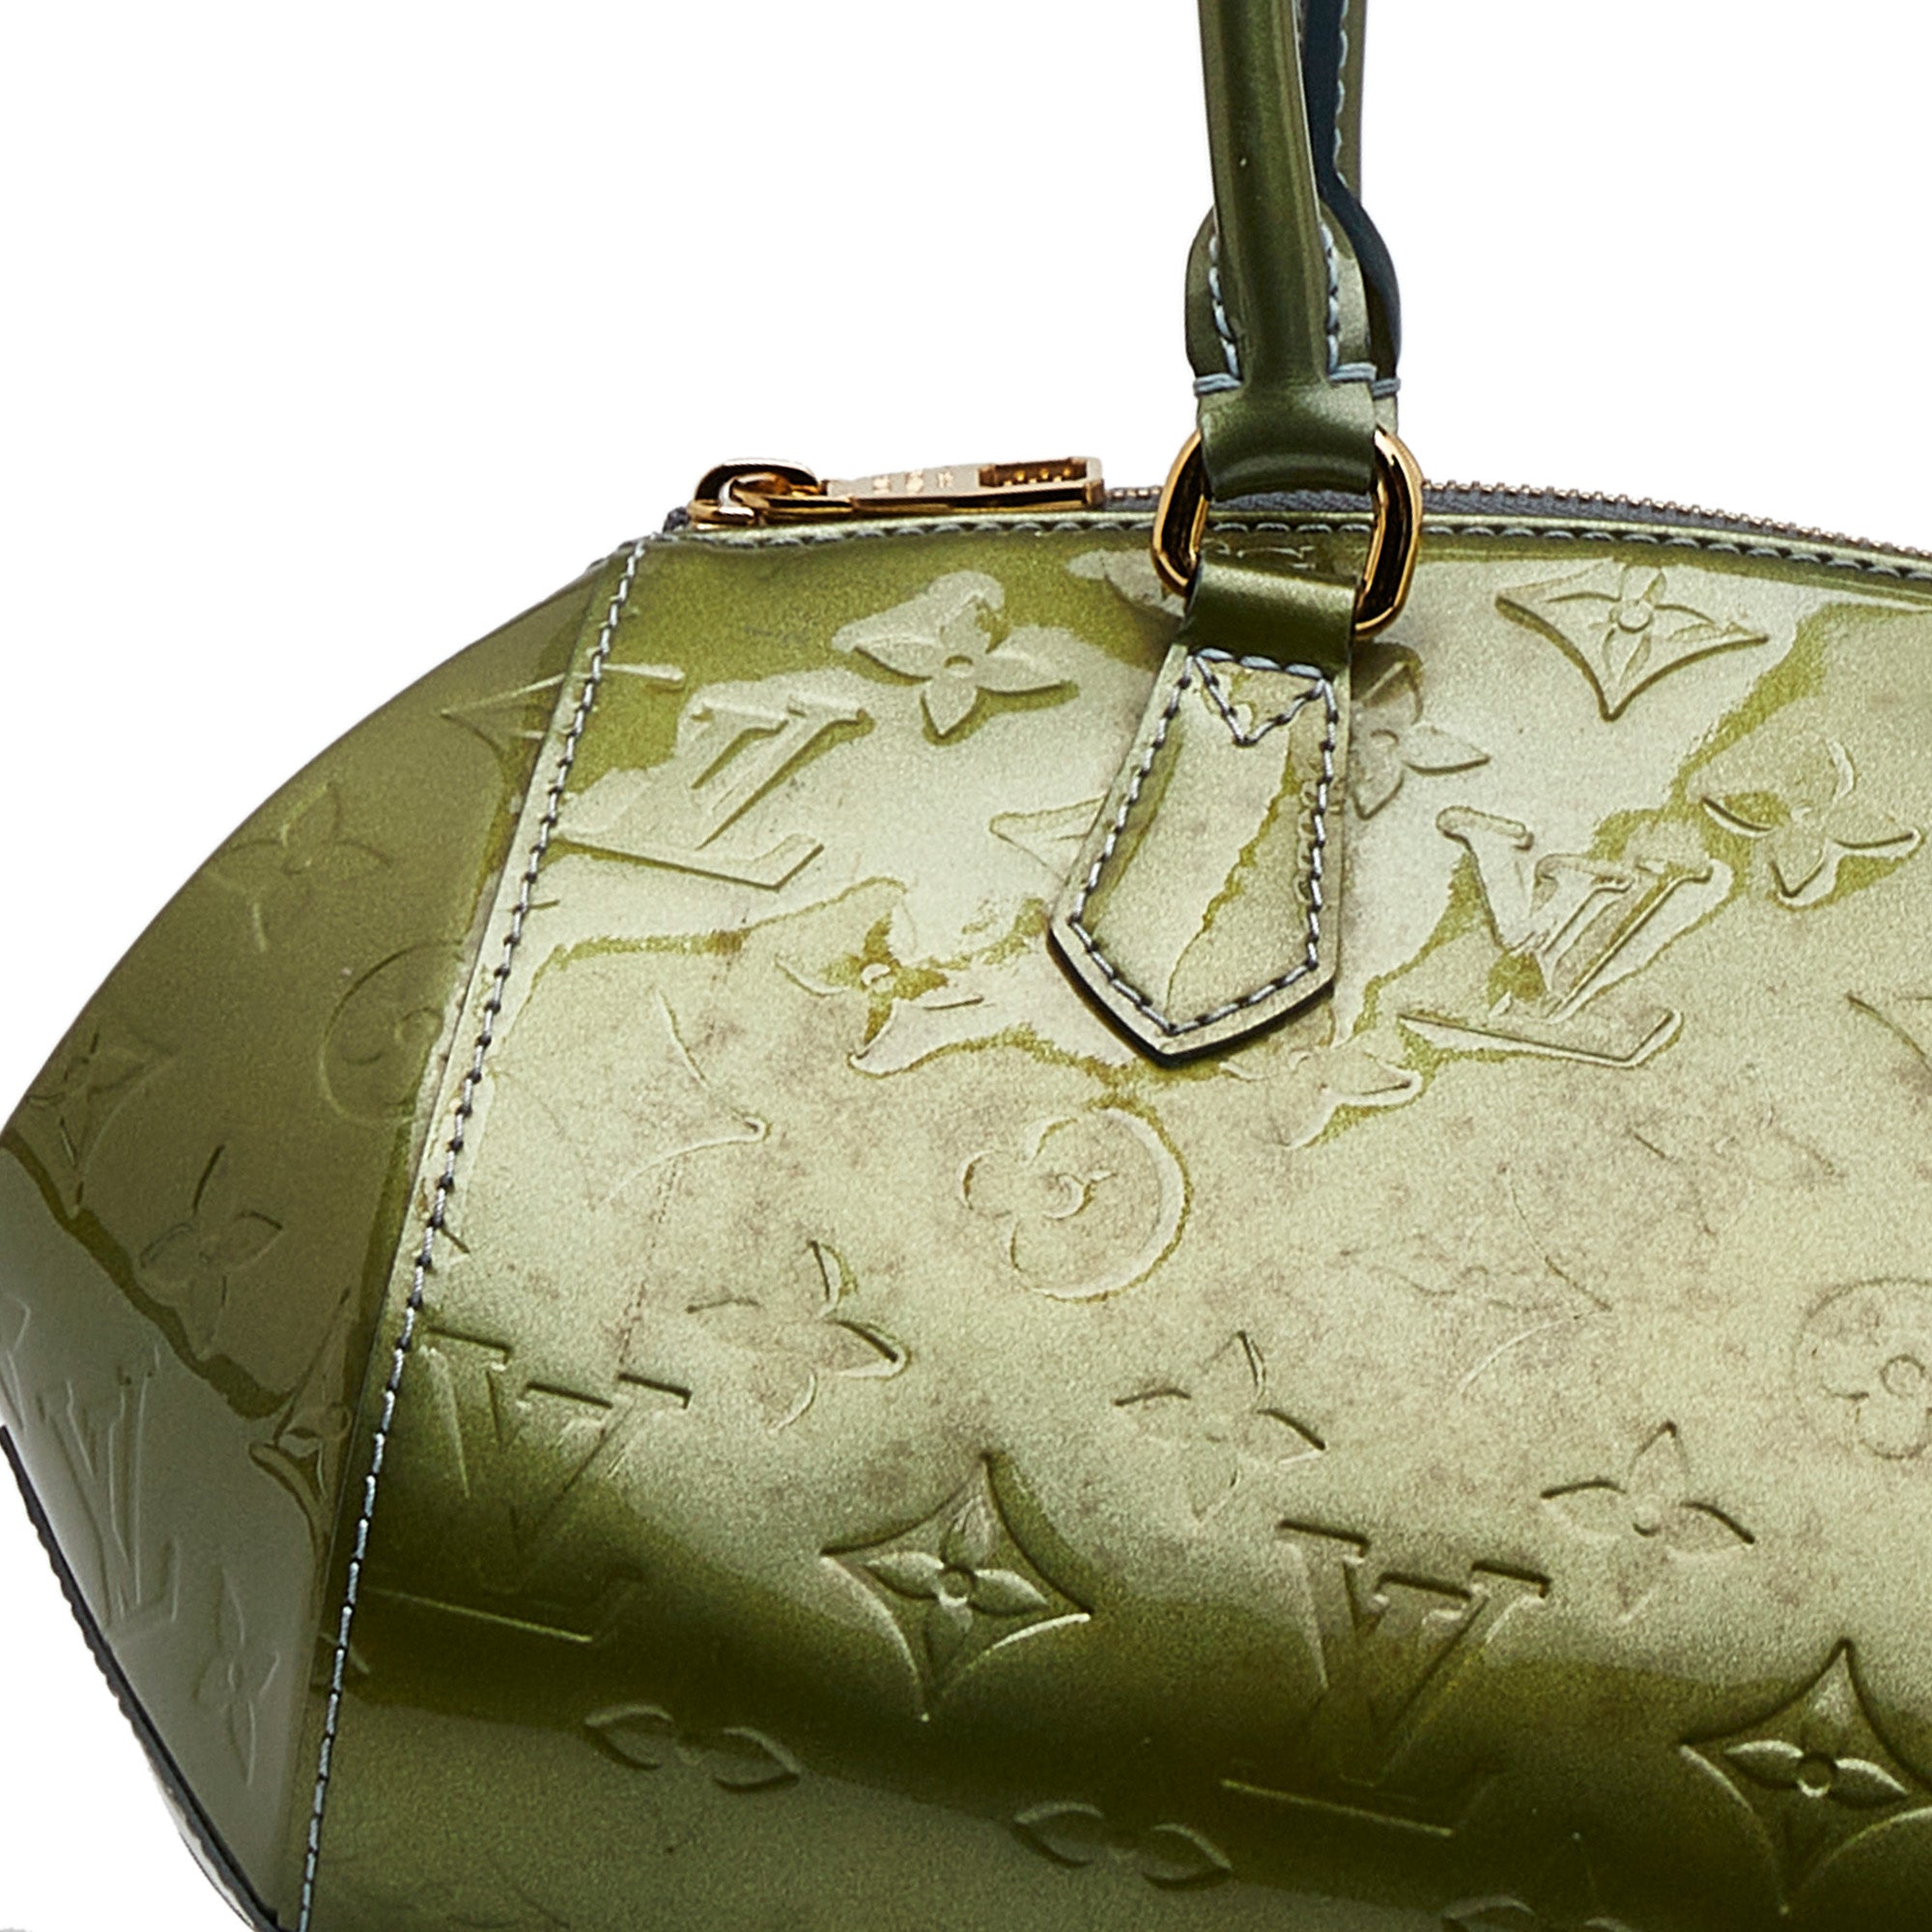 Louis Vuitton Sherwood Bag Review 